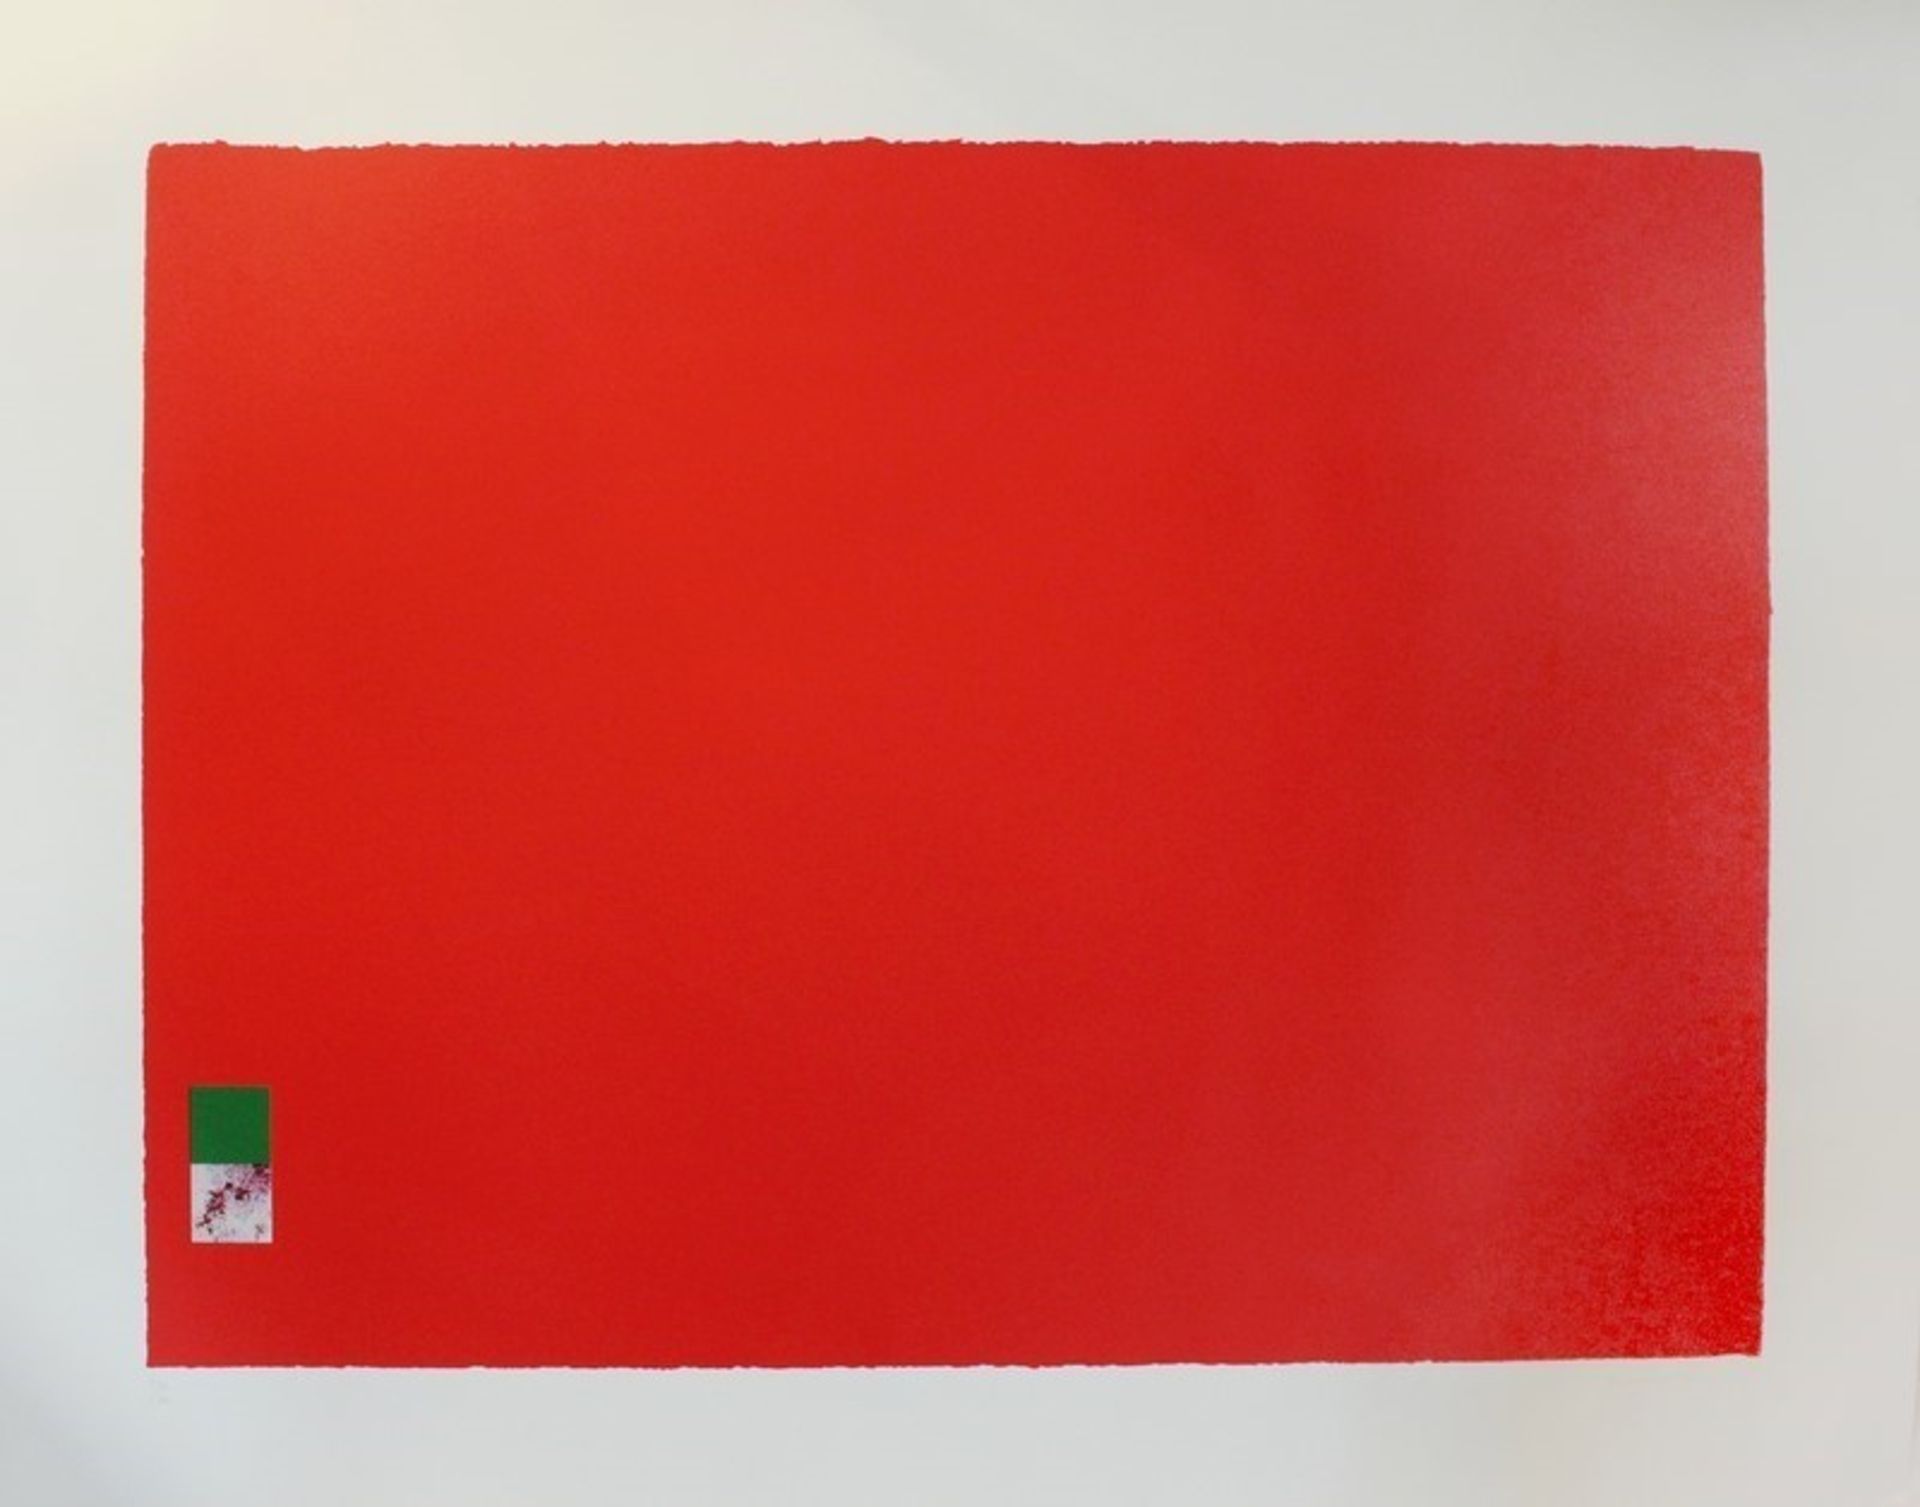 Vaux, Marc "Rot", Farbserigraphie, rote Fläche m. grünem u. marmoriertem Quadrat., li. un. num. 34/